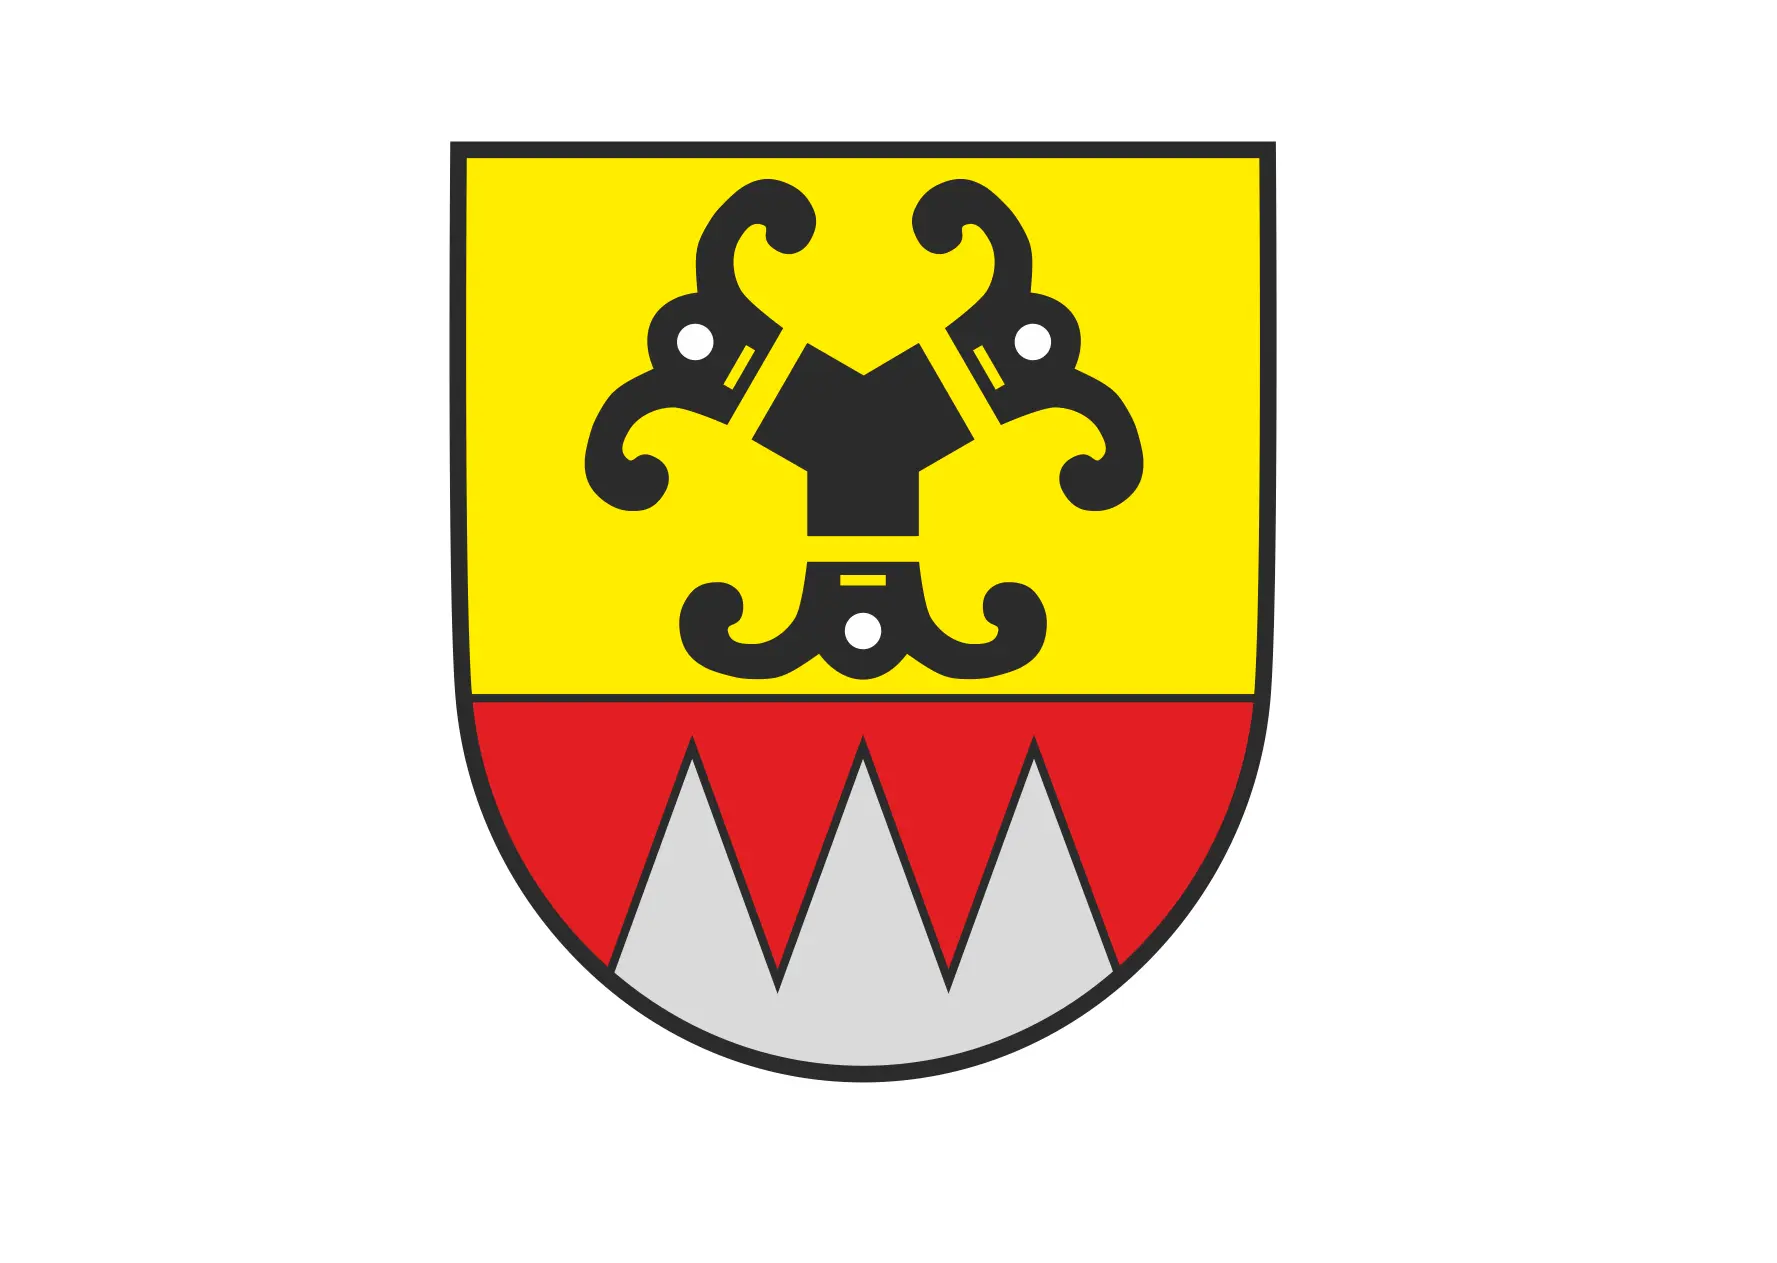 Wappen Sulzfeld